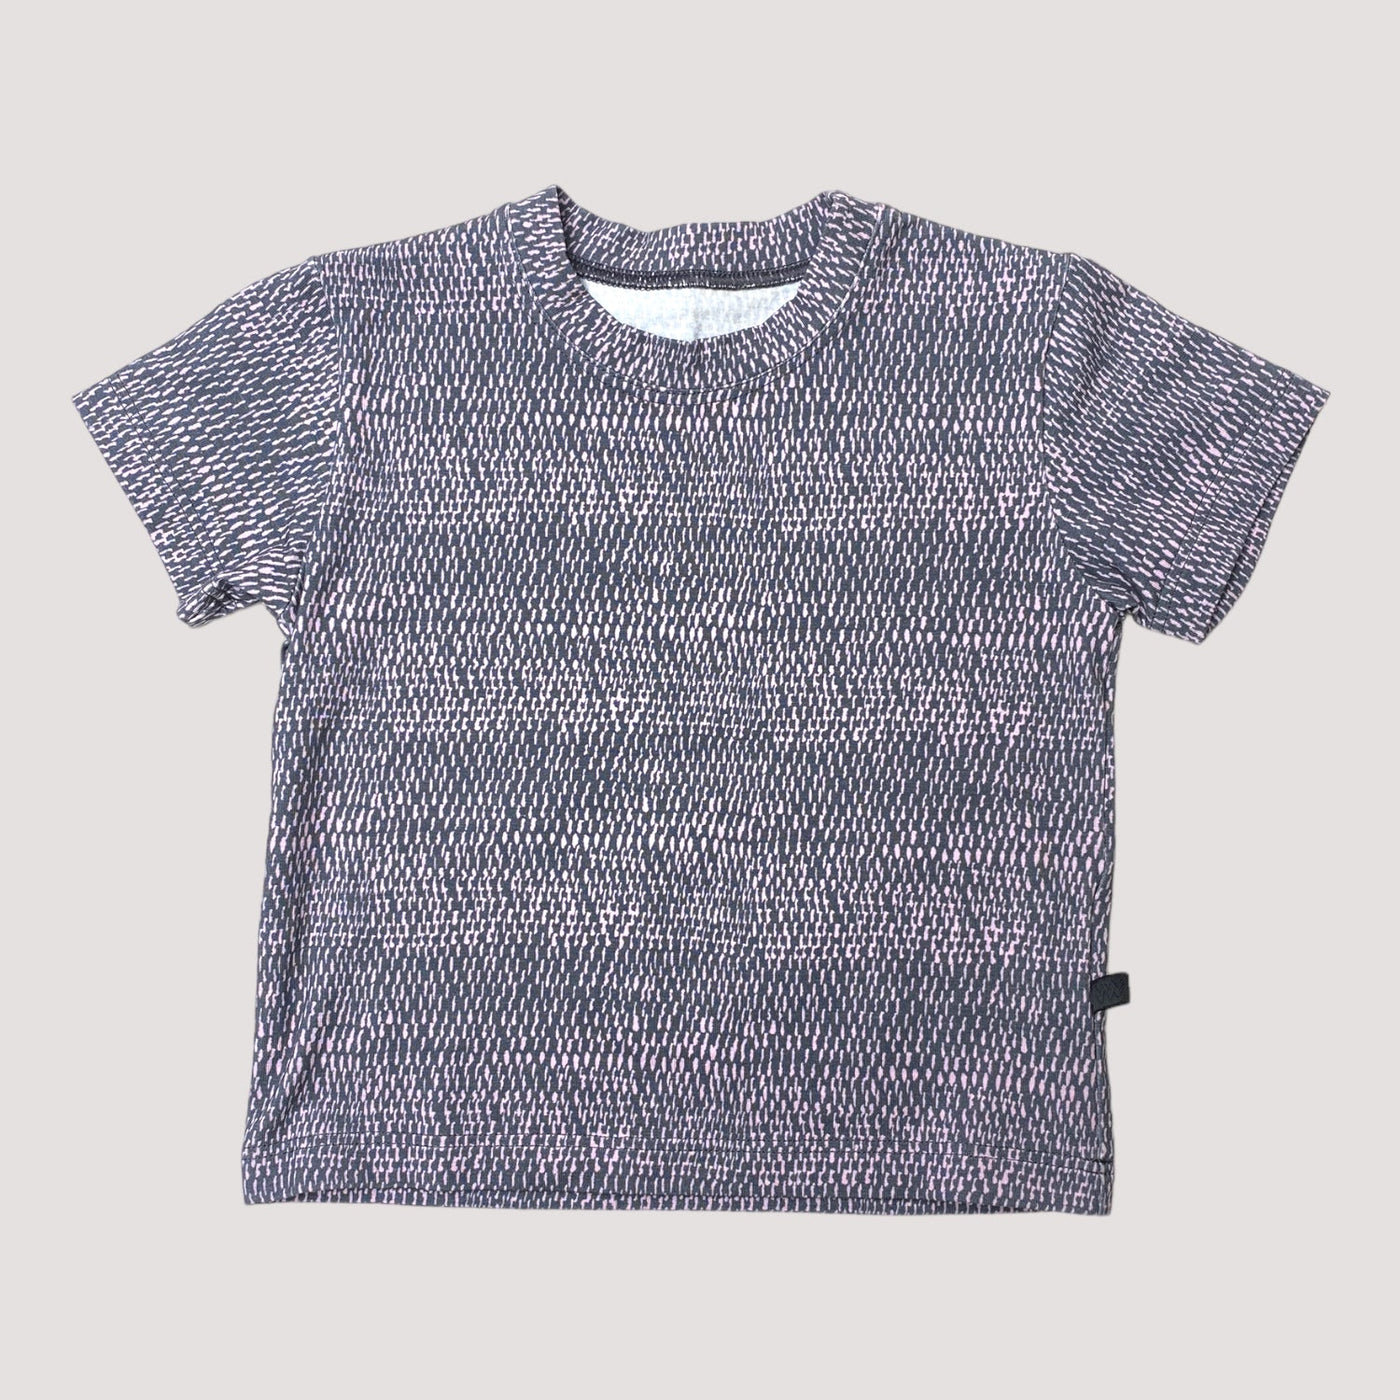 Vimma t-shirt, pink/grey | 80cm